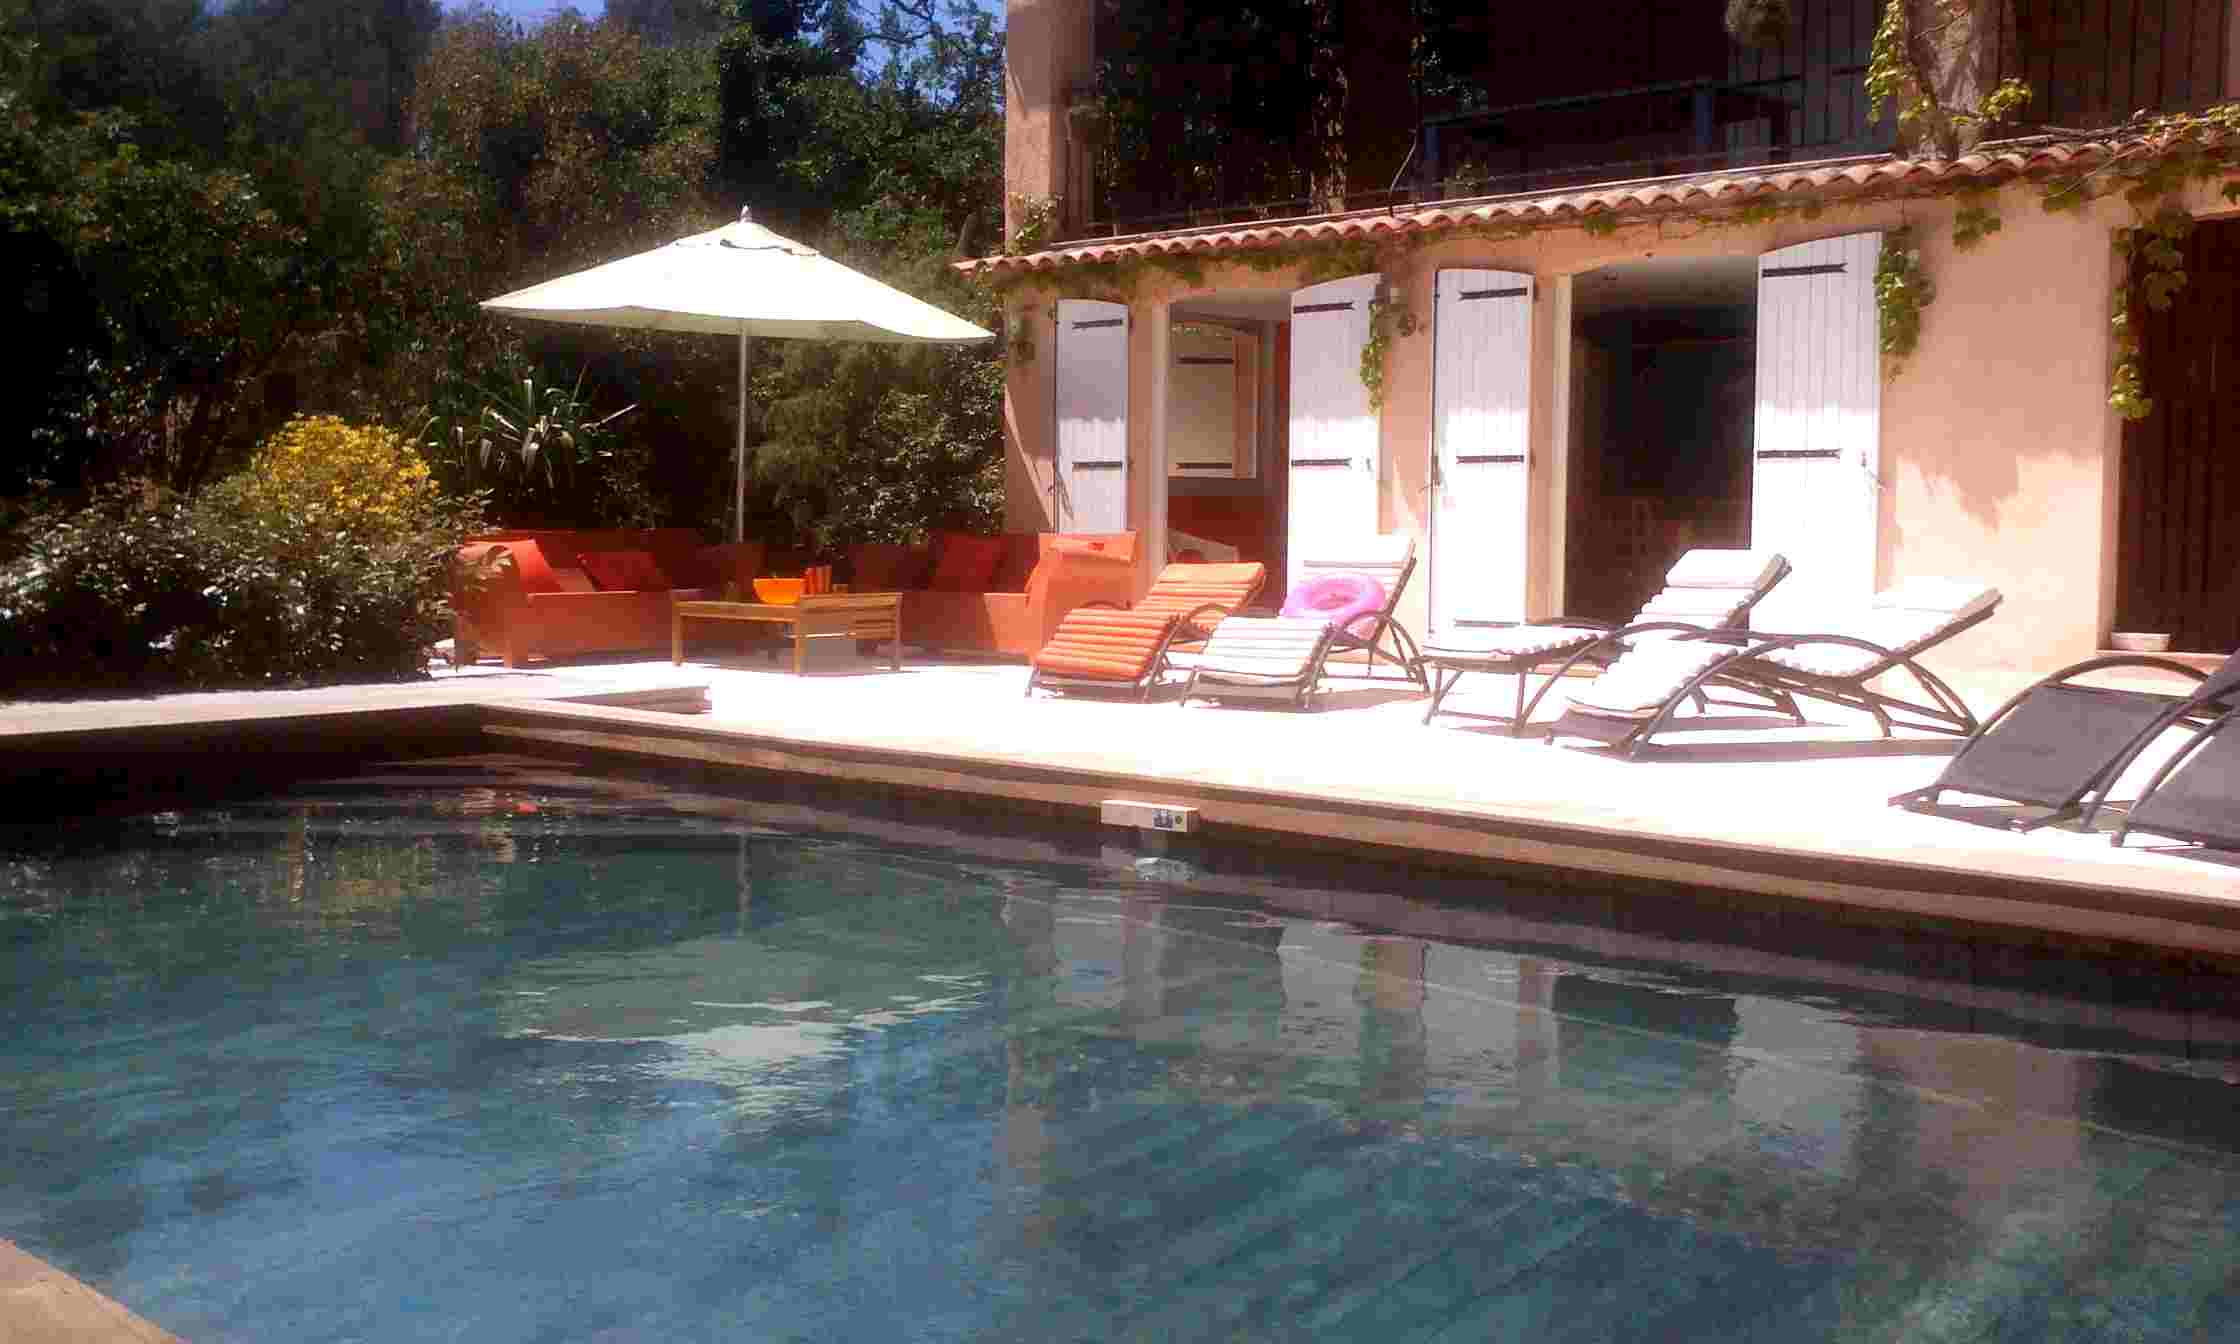  Villa I Côte Azur med 4 soverom plass for 8 personer,Frankrike,privat basseng.